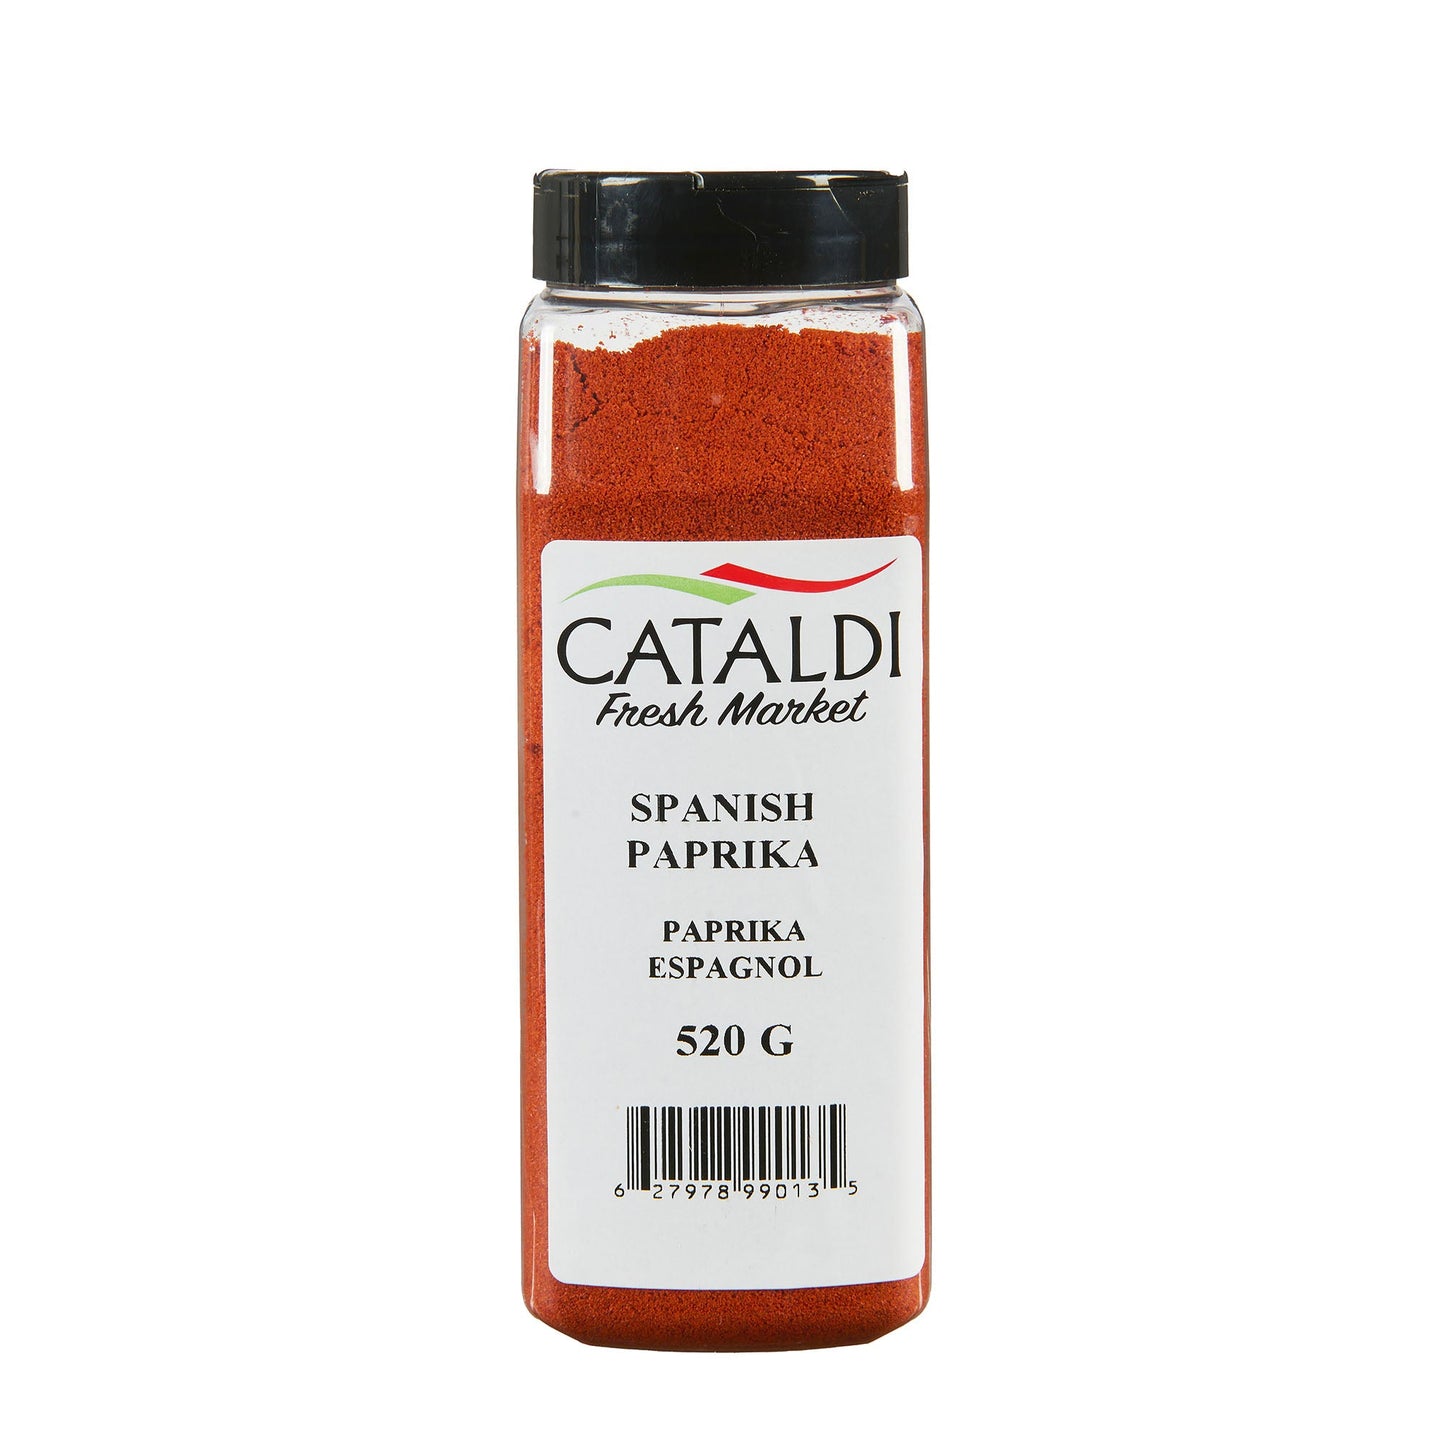 Cataldi Paprika Spanish 520G